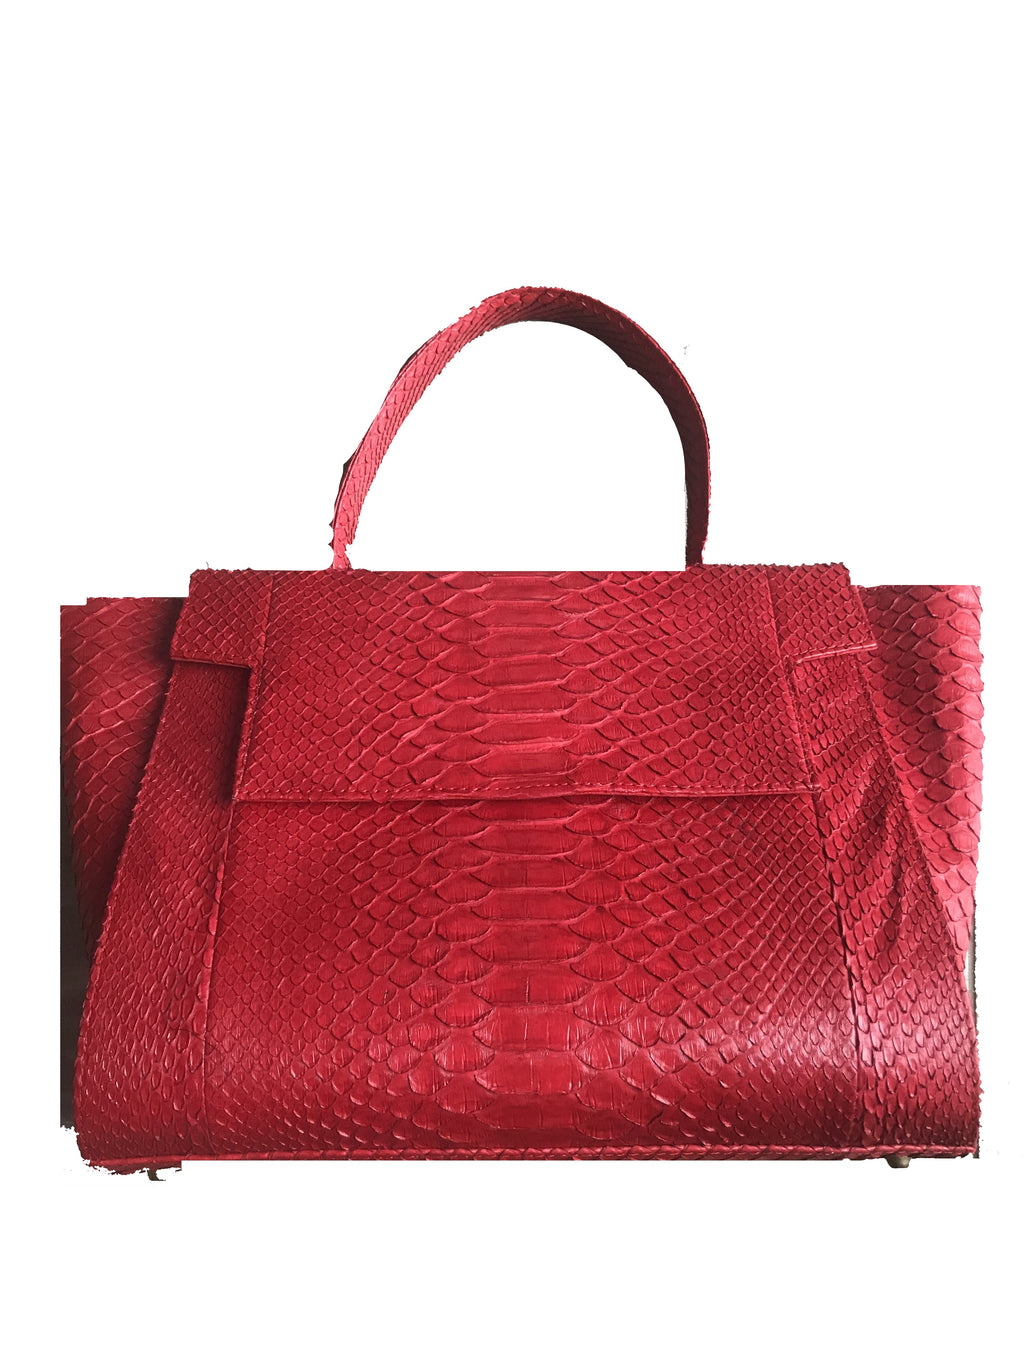 Red Python Handbag by VRC